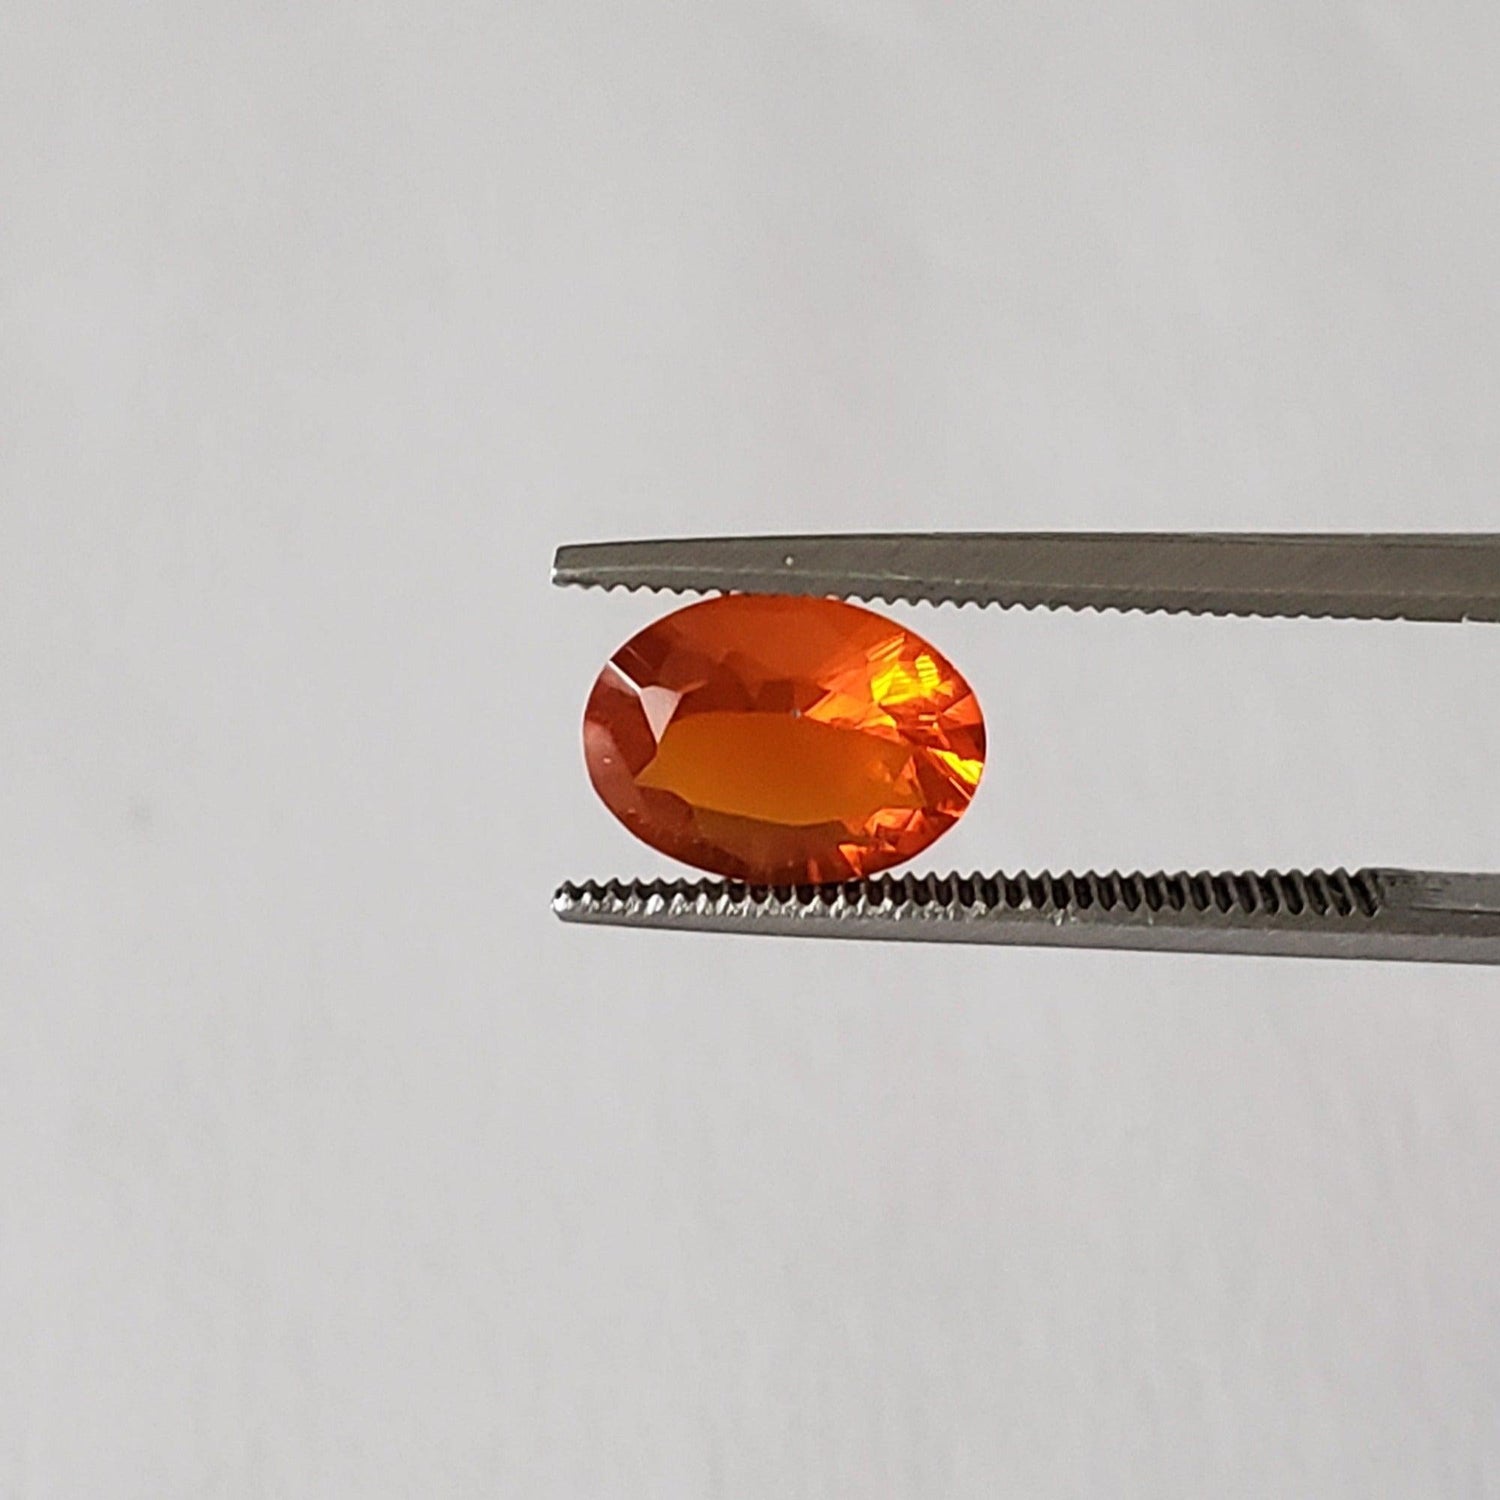 Cherry Opal | Oval Cut | Reddish Orange | 9x7mm 1.2ct | Mexico